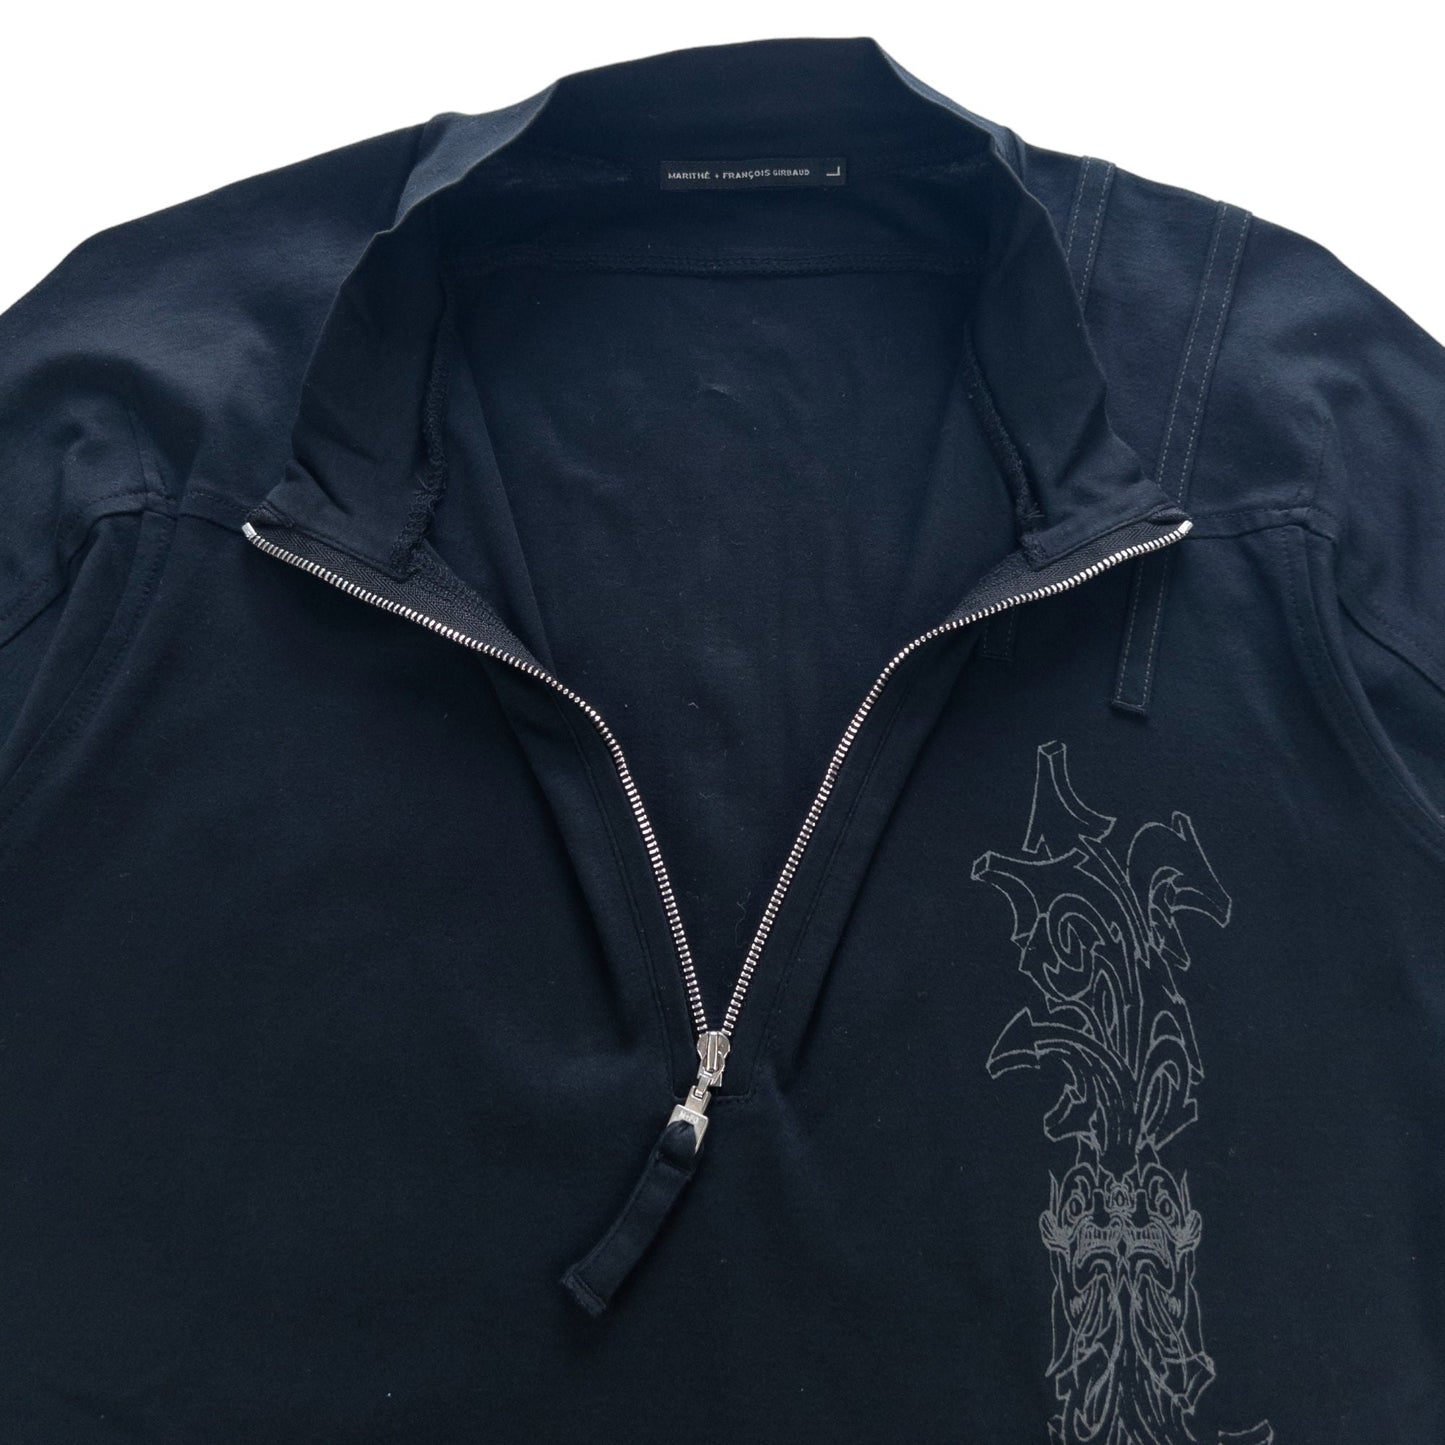 Vintage Marithe + Francois Girbaud Zip Up T Shirt Size M